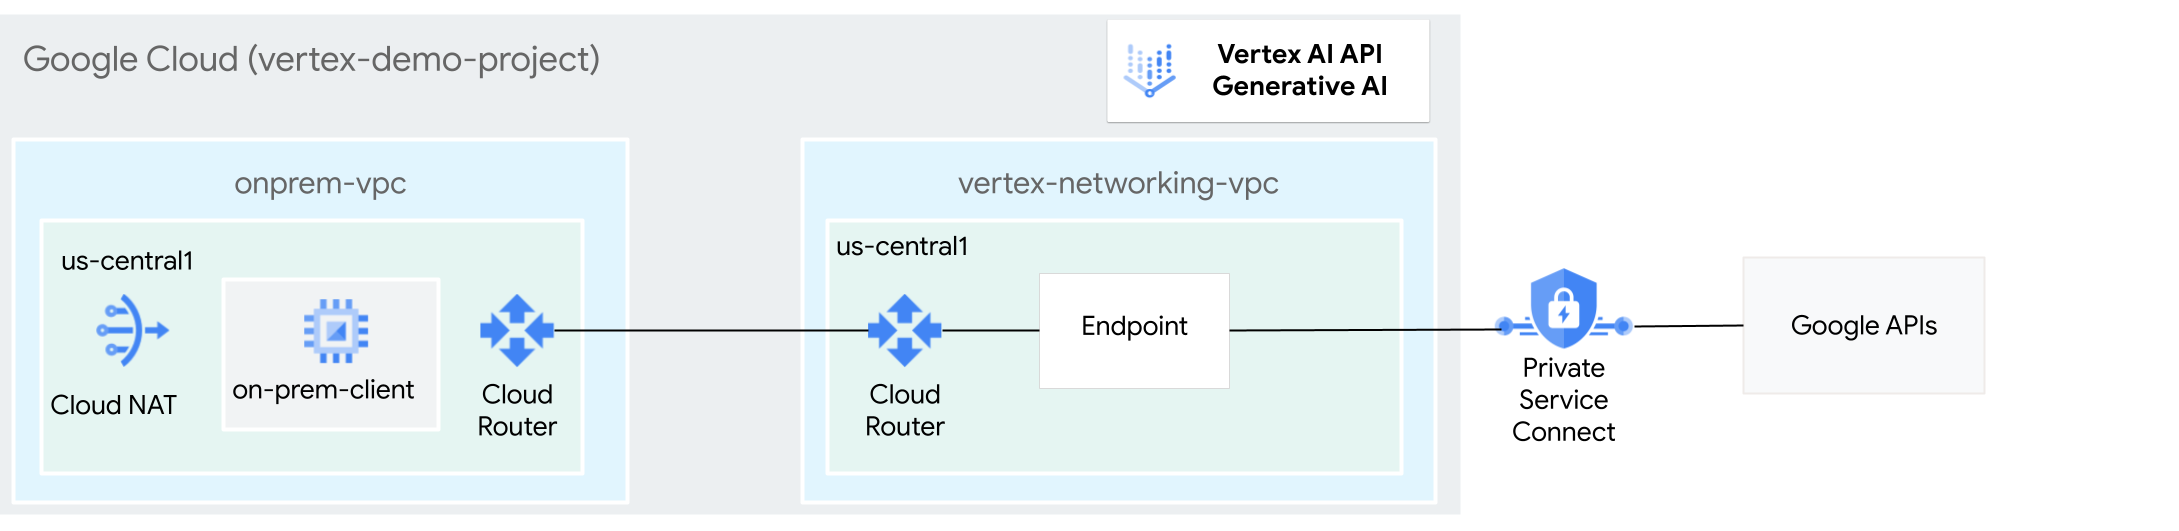 Architectural diagram of using Private Service Connect to access Generative AI on Vertex AI.